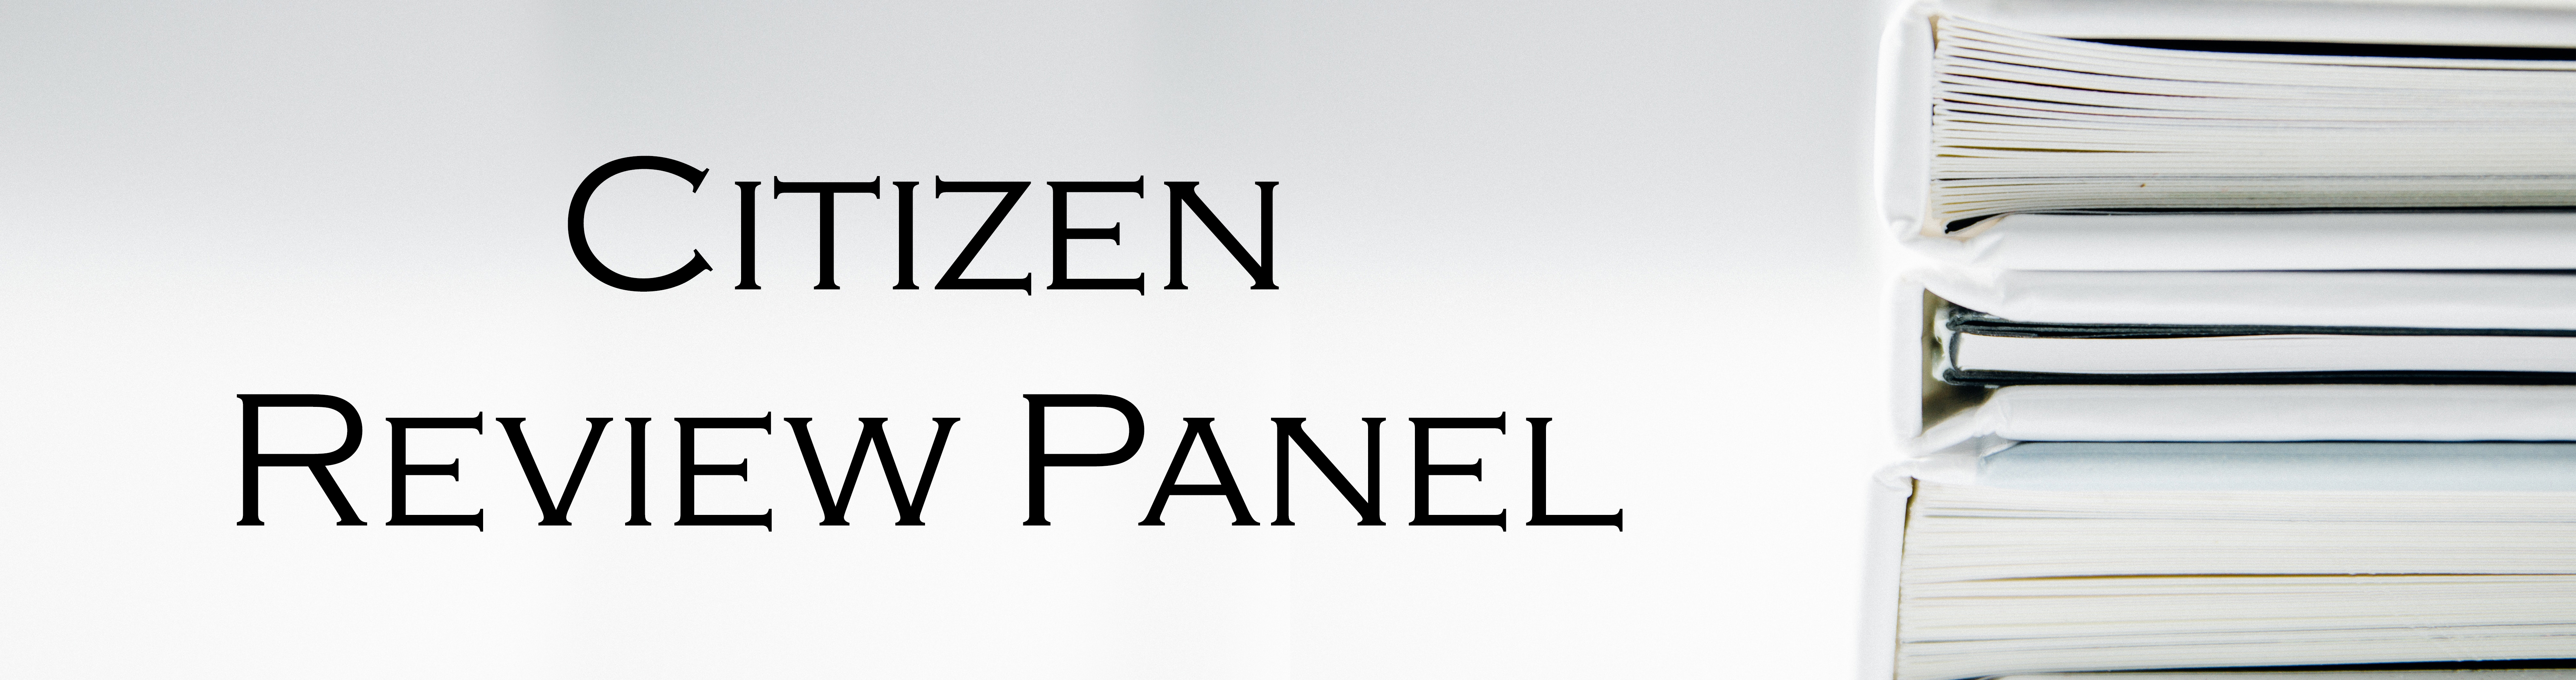 Citizen Review Panel Banner